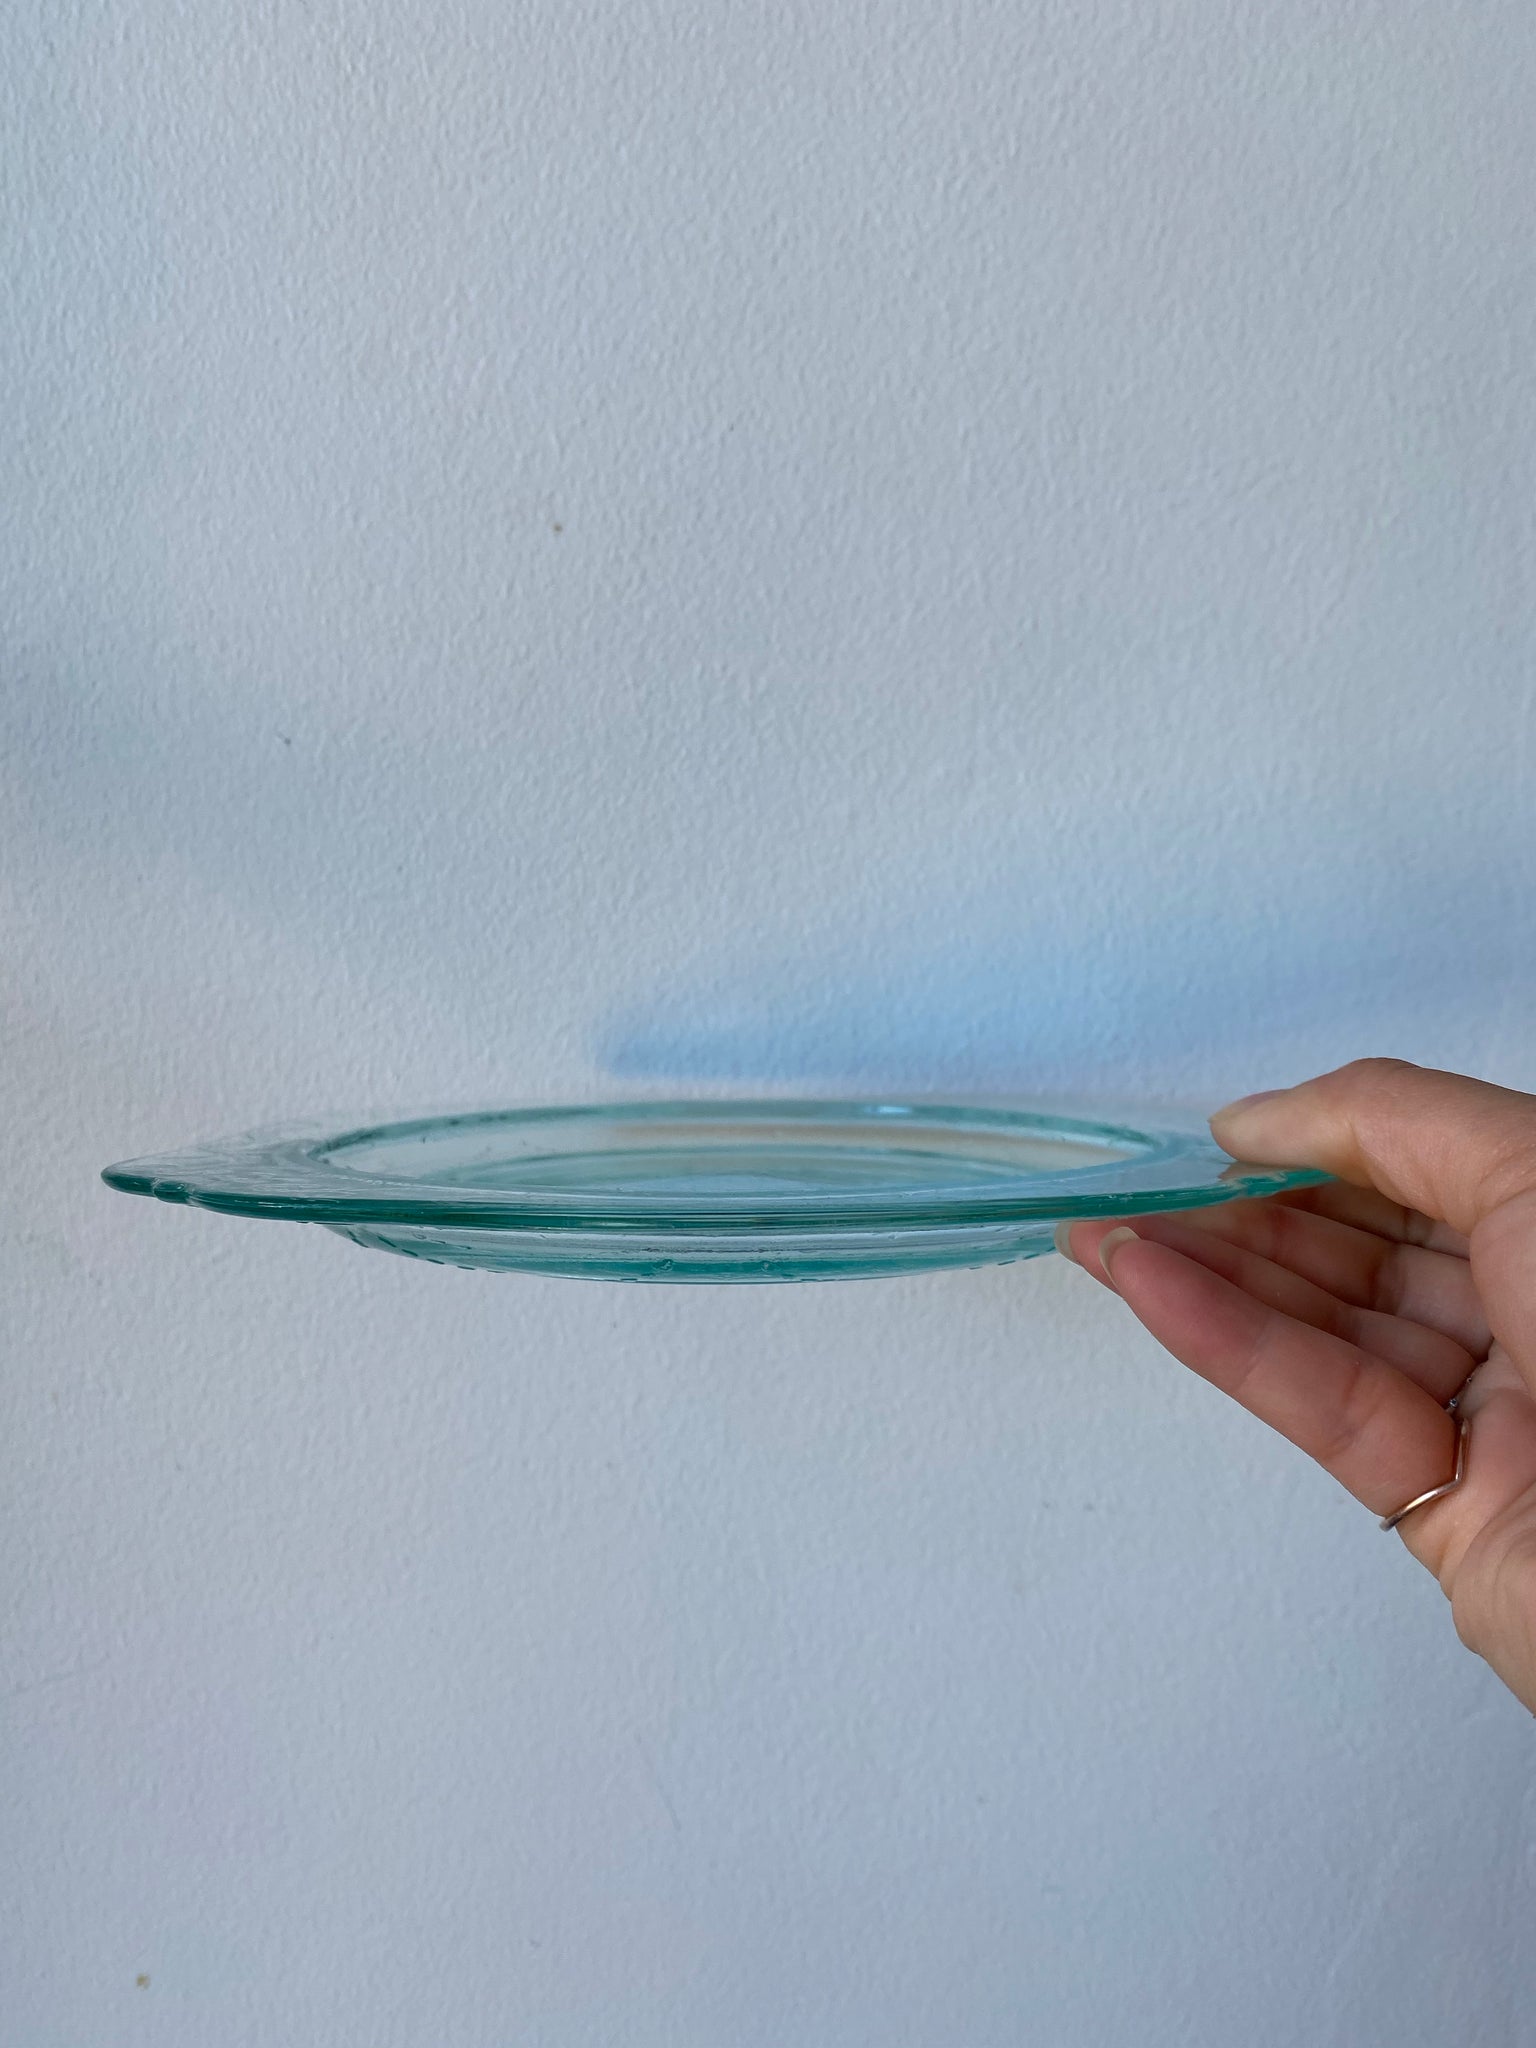 Small aqua reproduction depression glass plates set